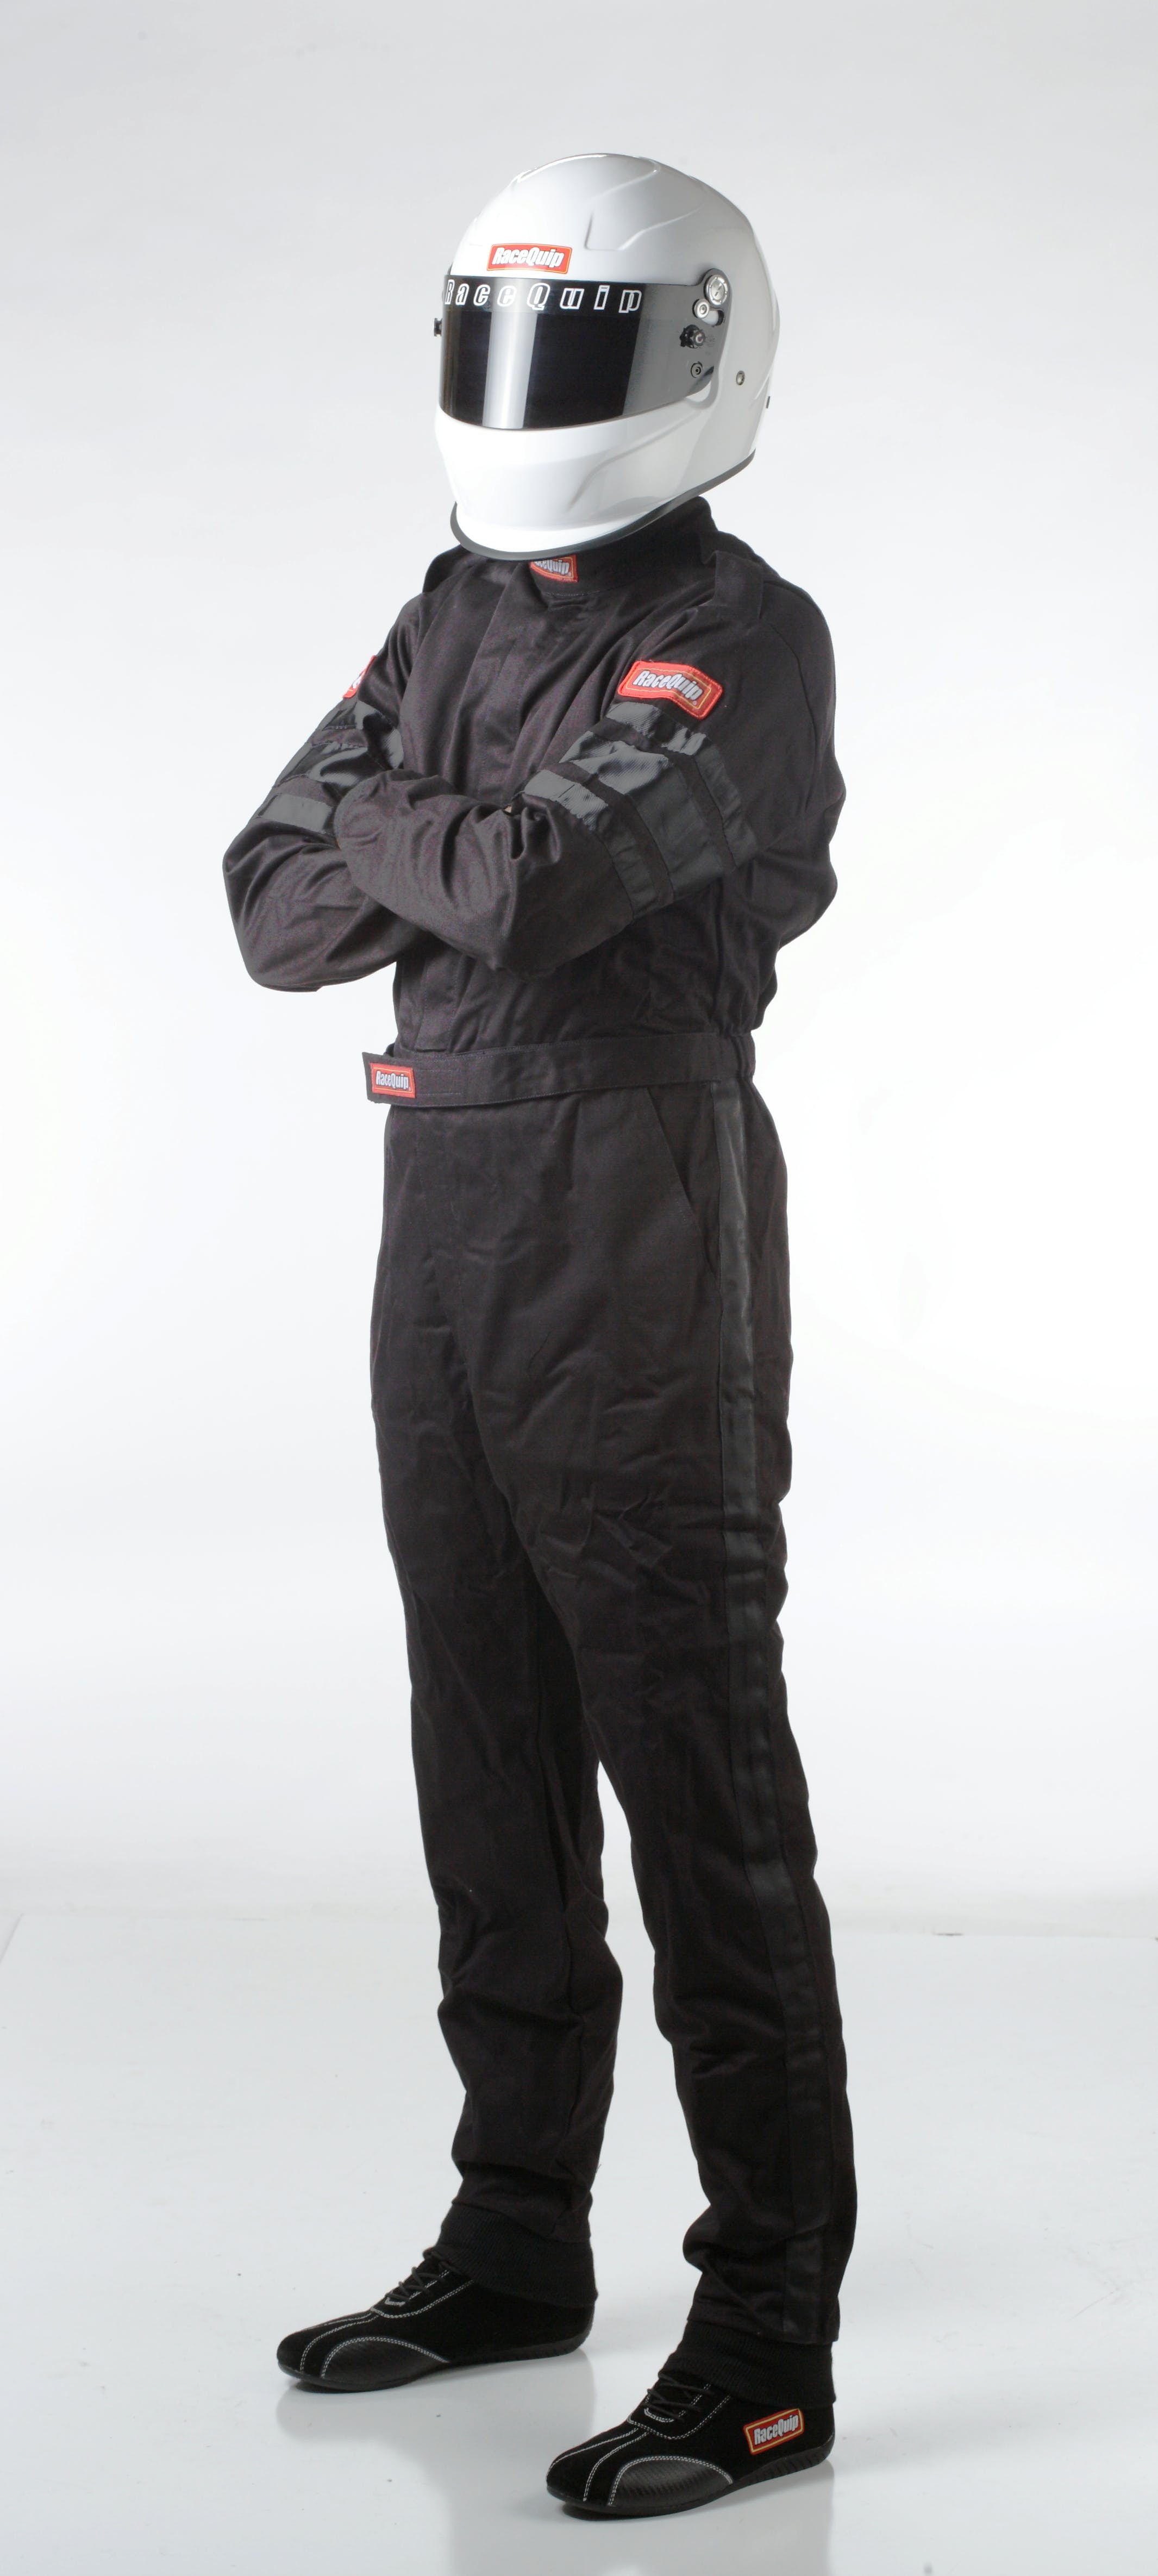 RaceQuip 110003 SFI-1 Pyrovatex One-Piece Single-Layer Racing Fire Suit (Black, Medium)